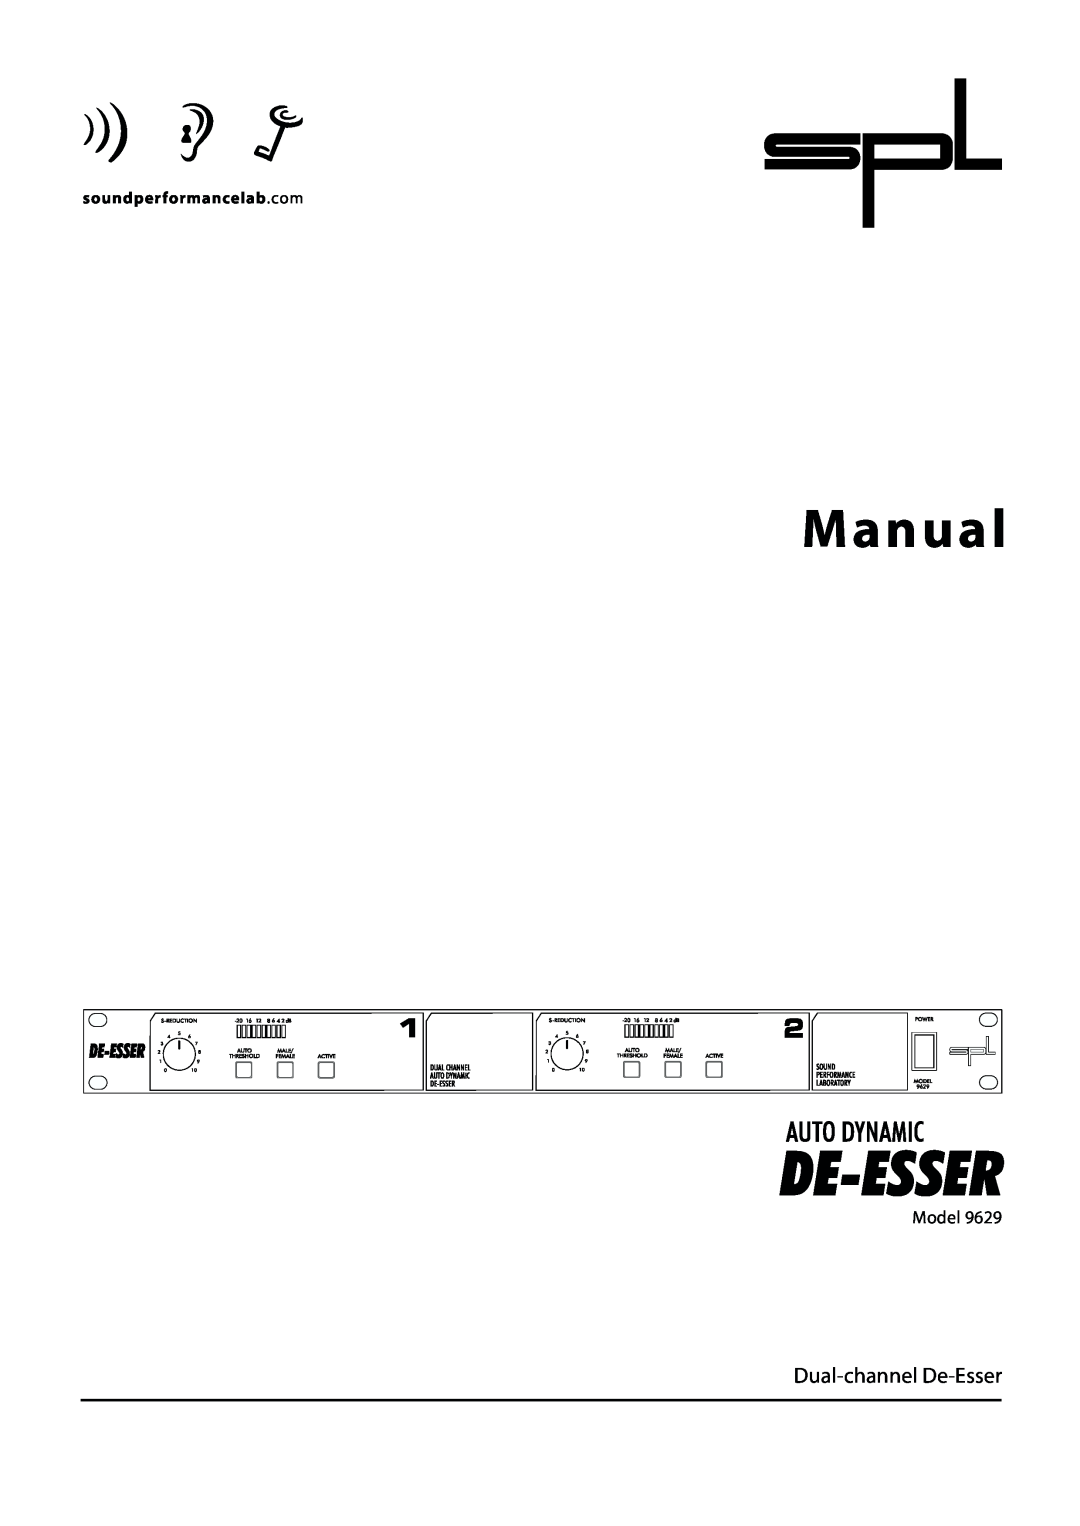 Sound Performance Lab 9629 manual Manual, Dual-channel De-Esser, Model 